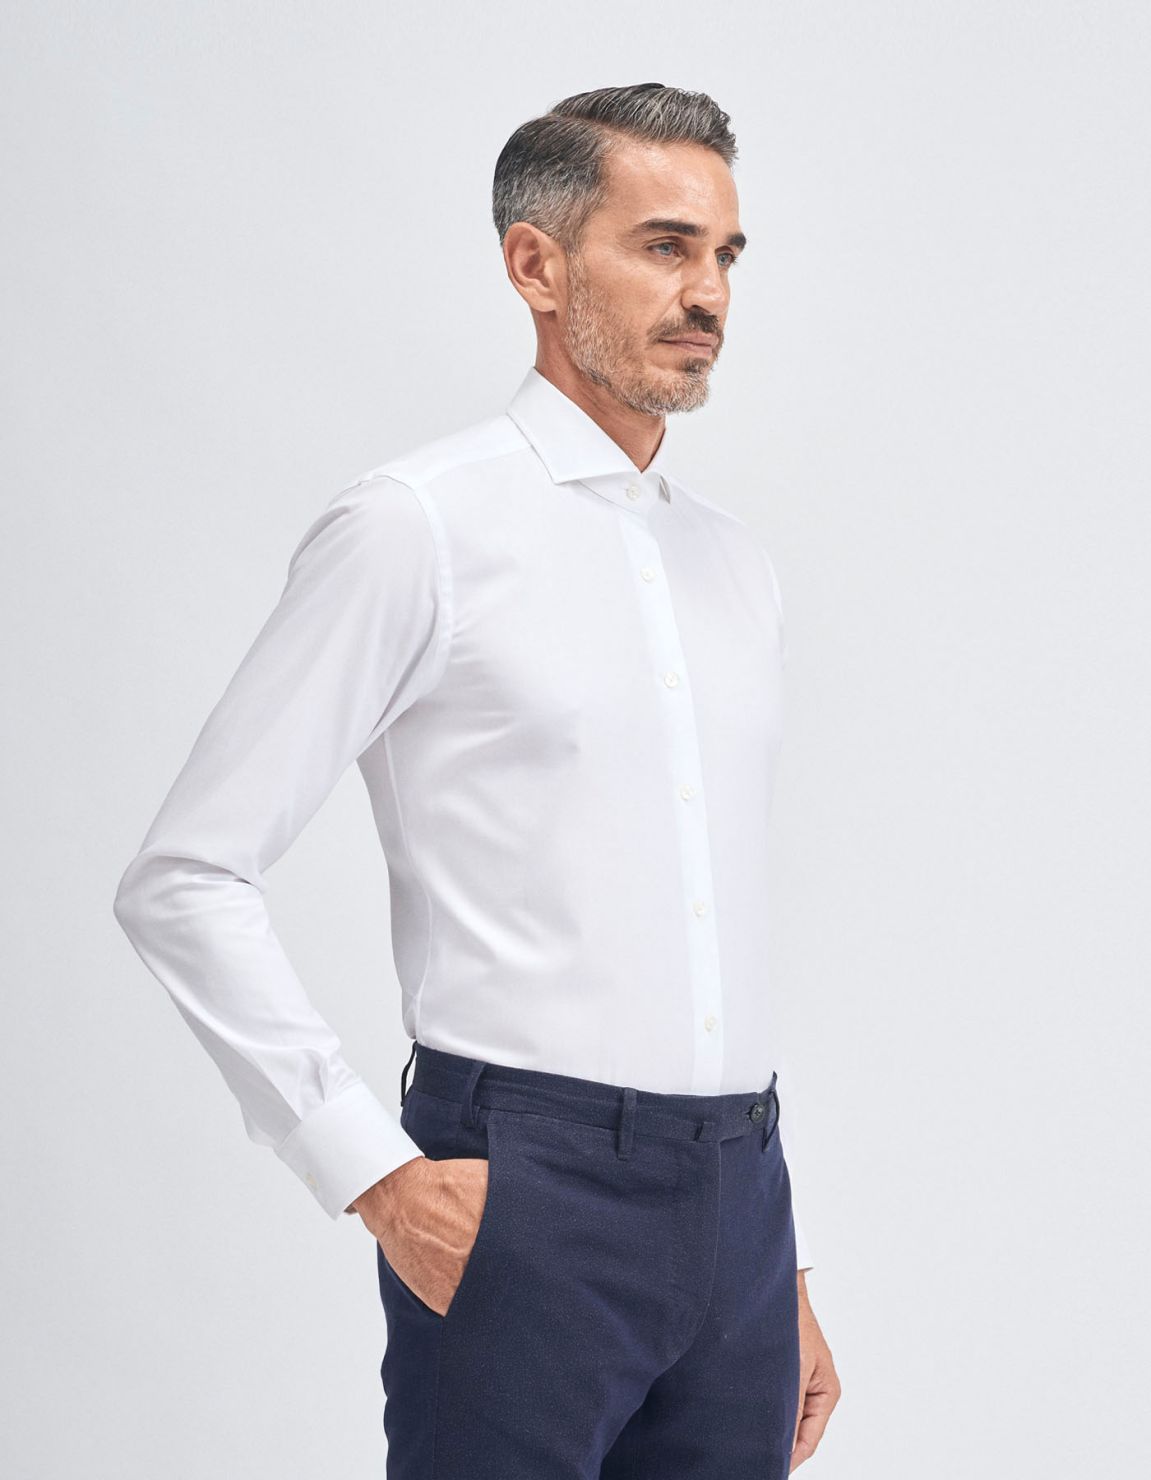 Shirt Collar cutaway White Oxford Slim Fit 1